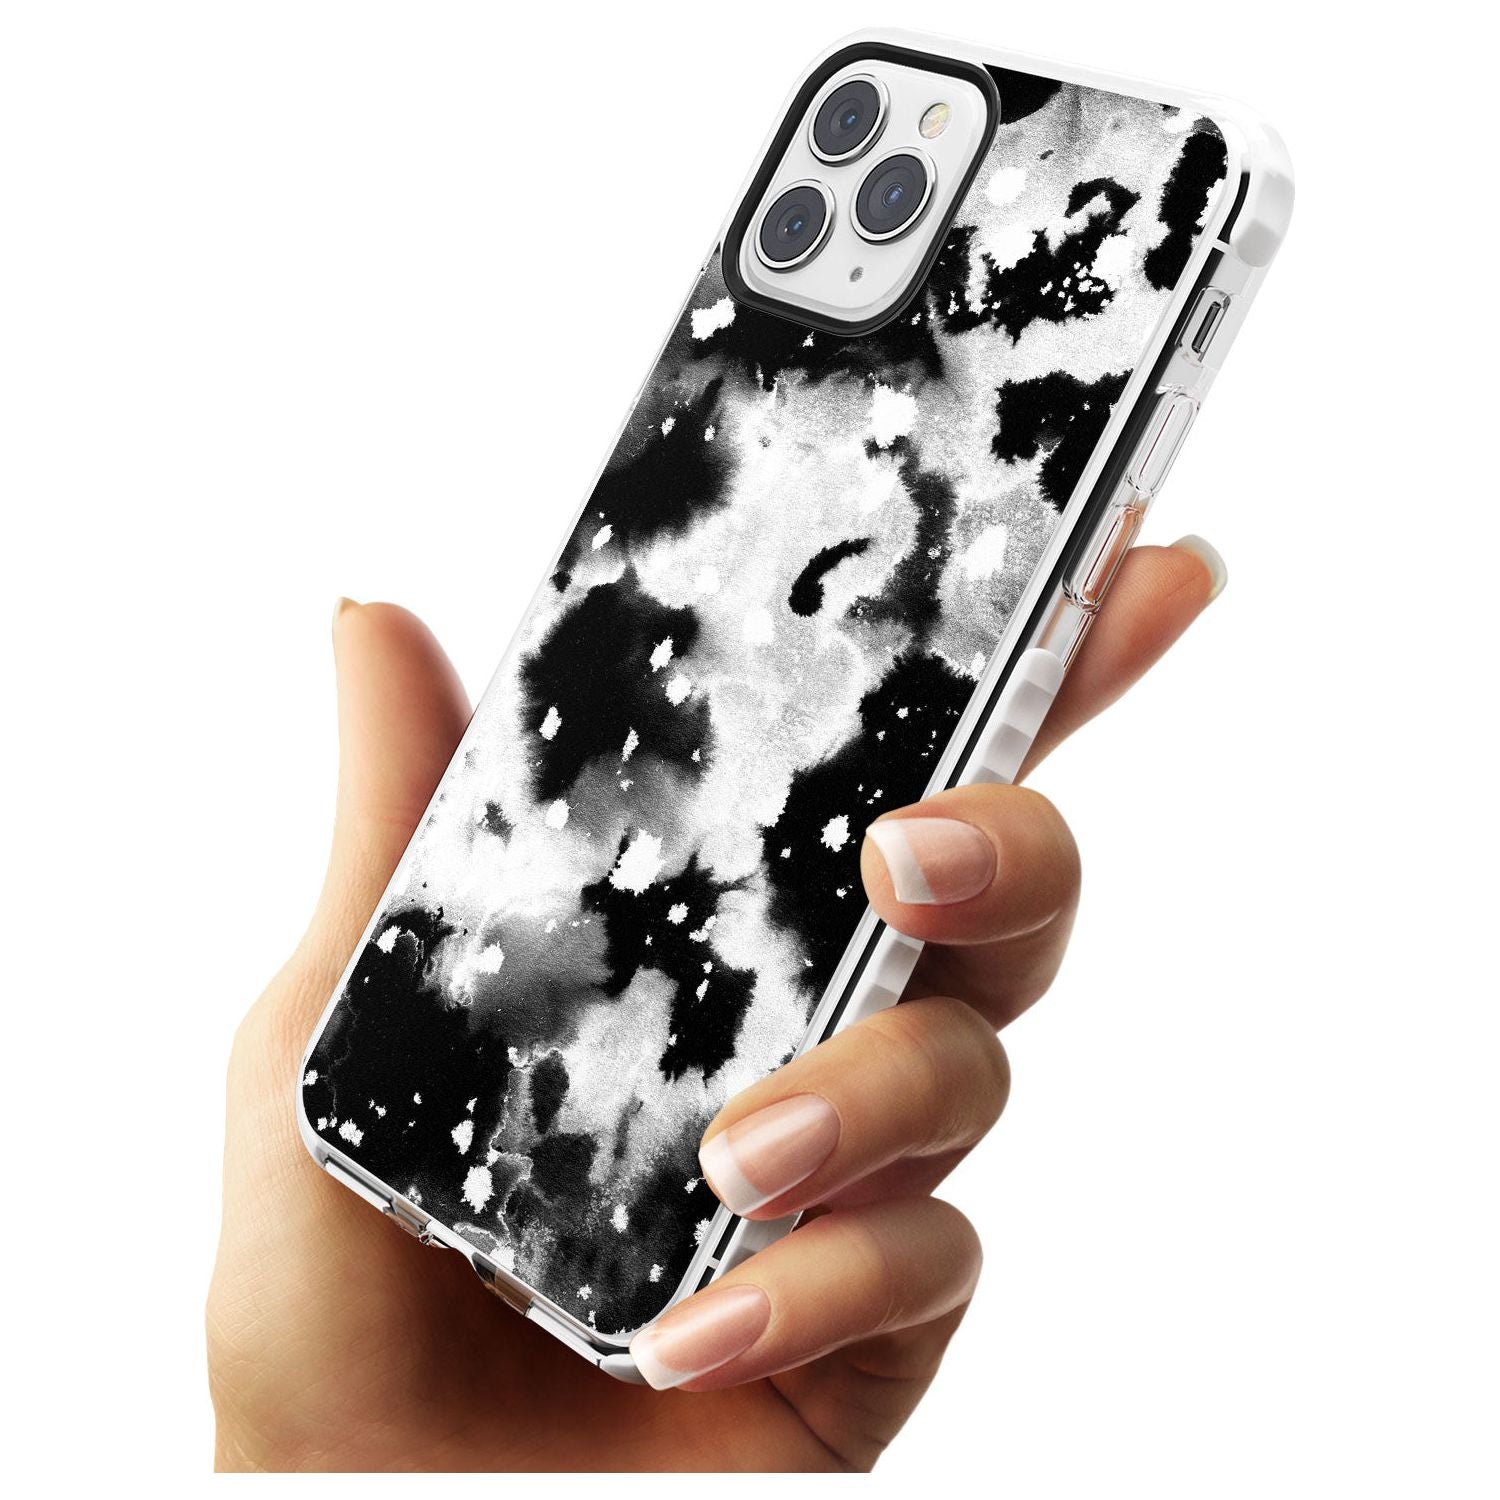 Black & White Acid Wash Tie-Dye Pattern Impact Phone Case for iPhone 11 Pro Max